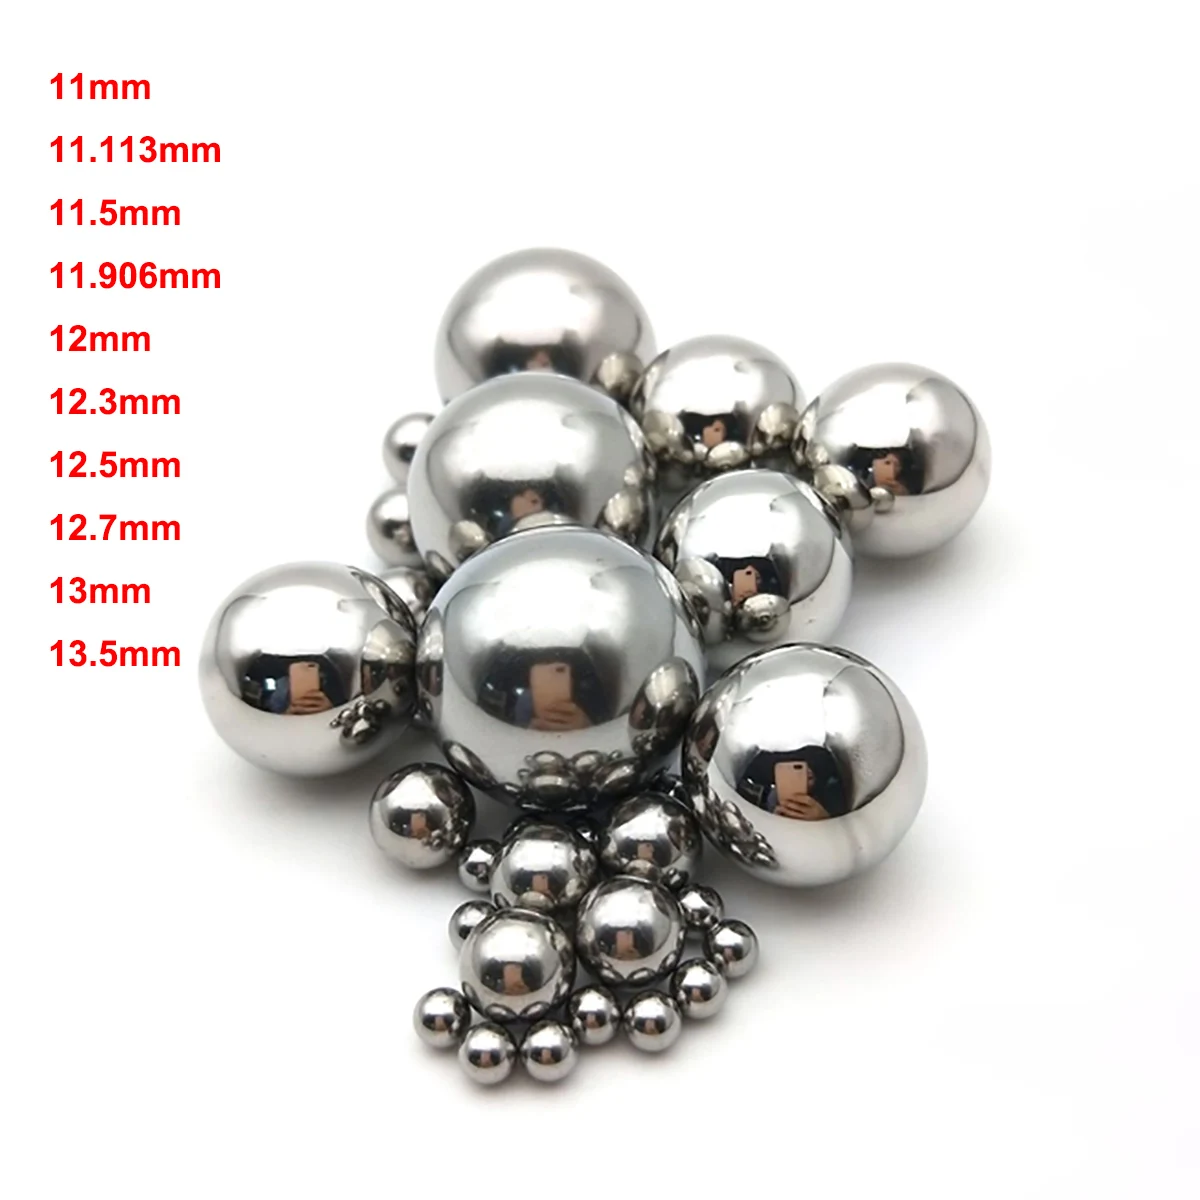 10pcs-11-11113-115-11906-12-123-125-127-13-135mm-high-precision-bearing-balls-gcr15-bearing-steel-smooth-solid-ball